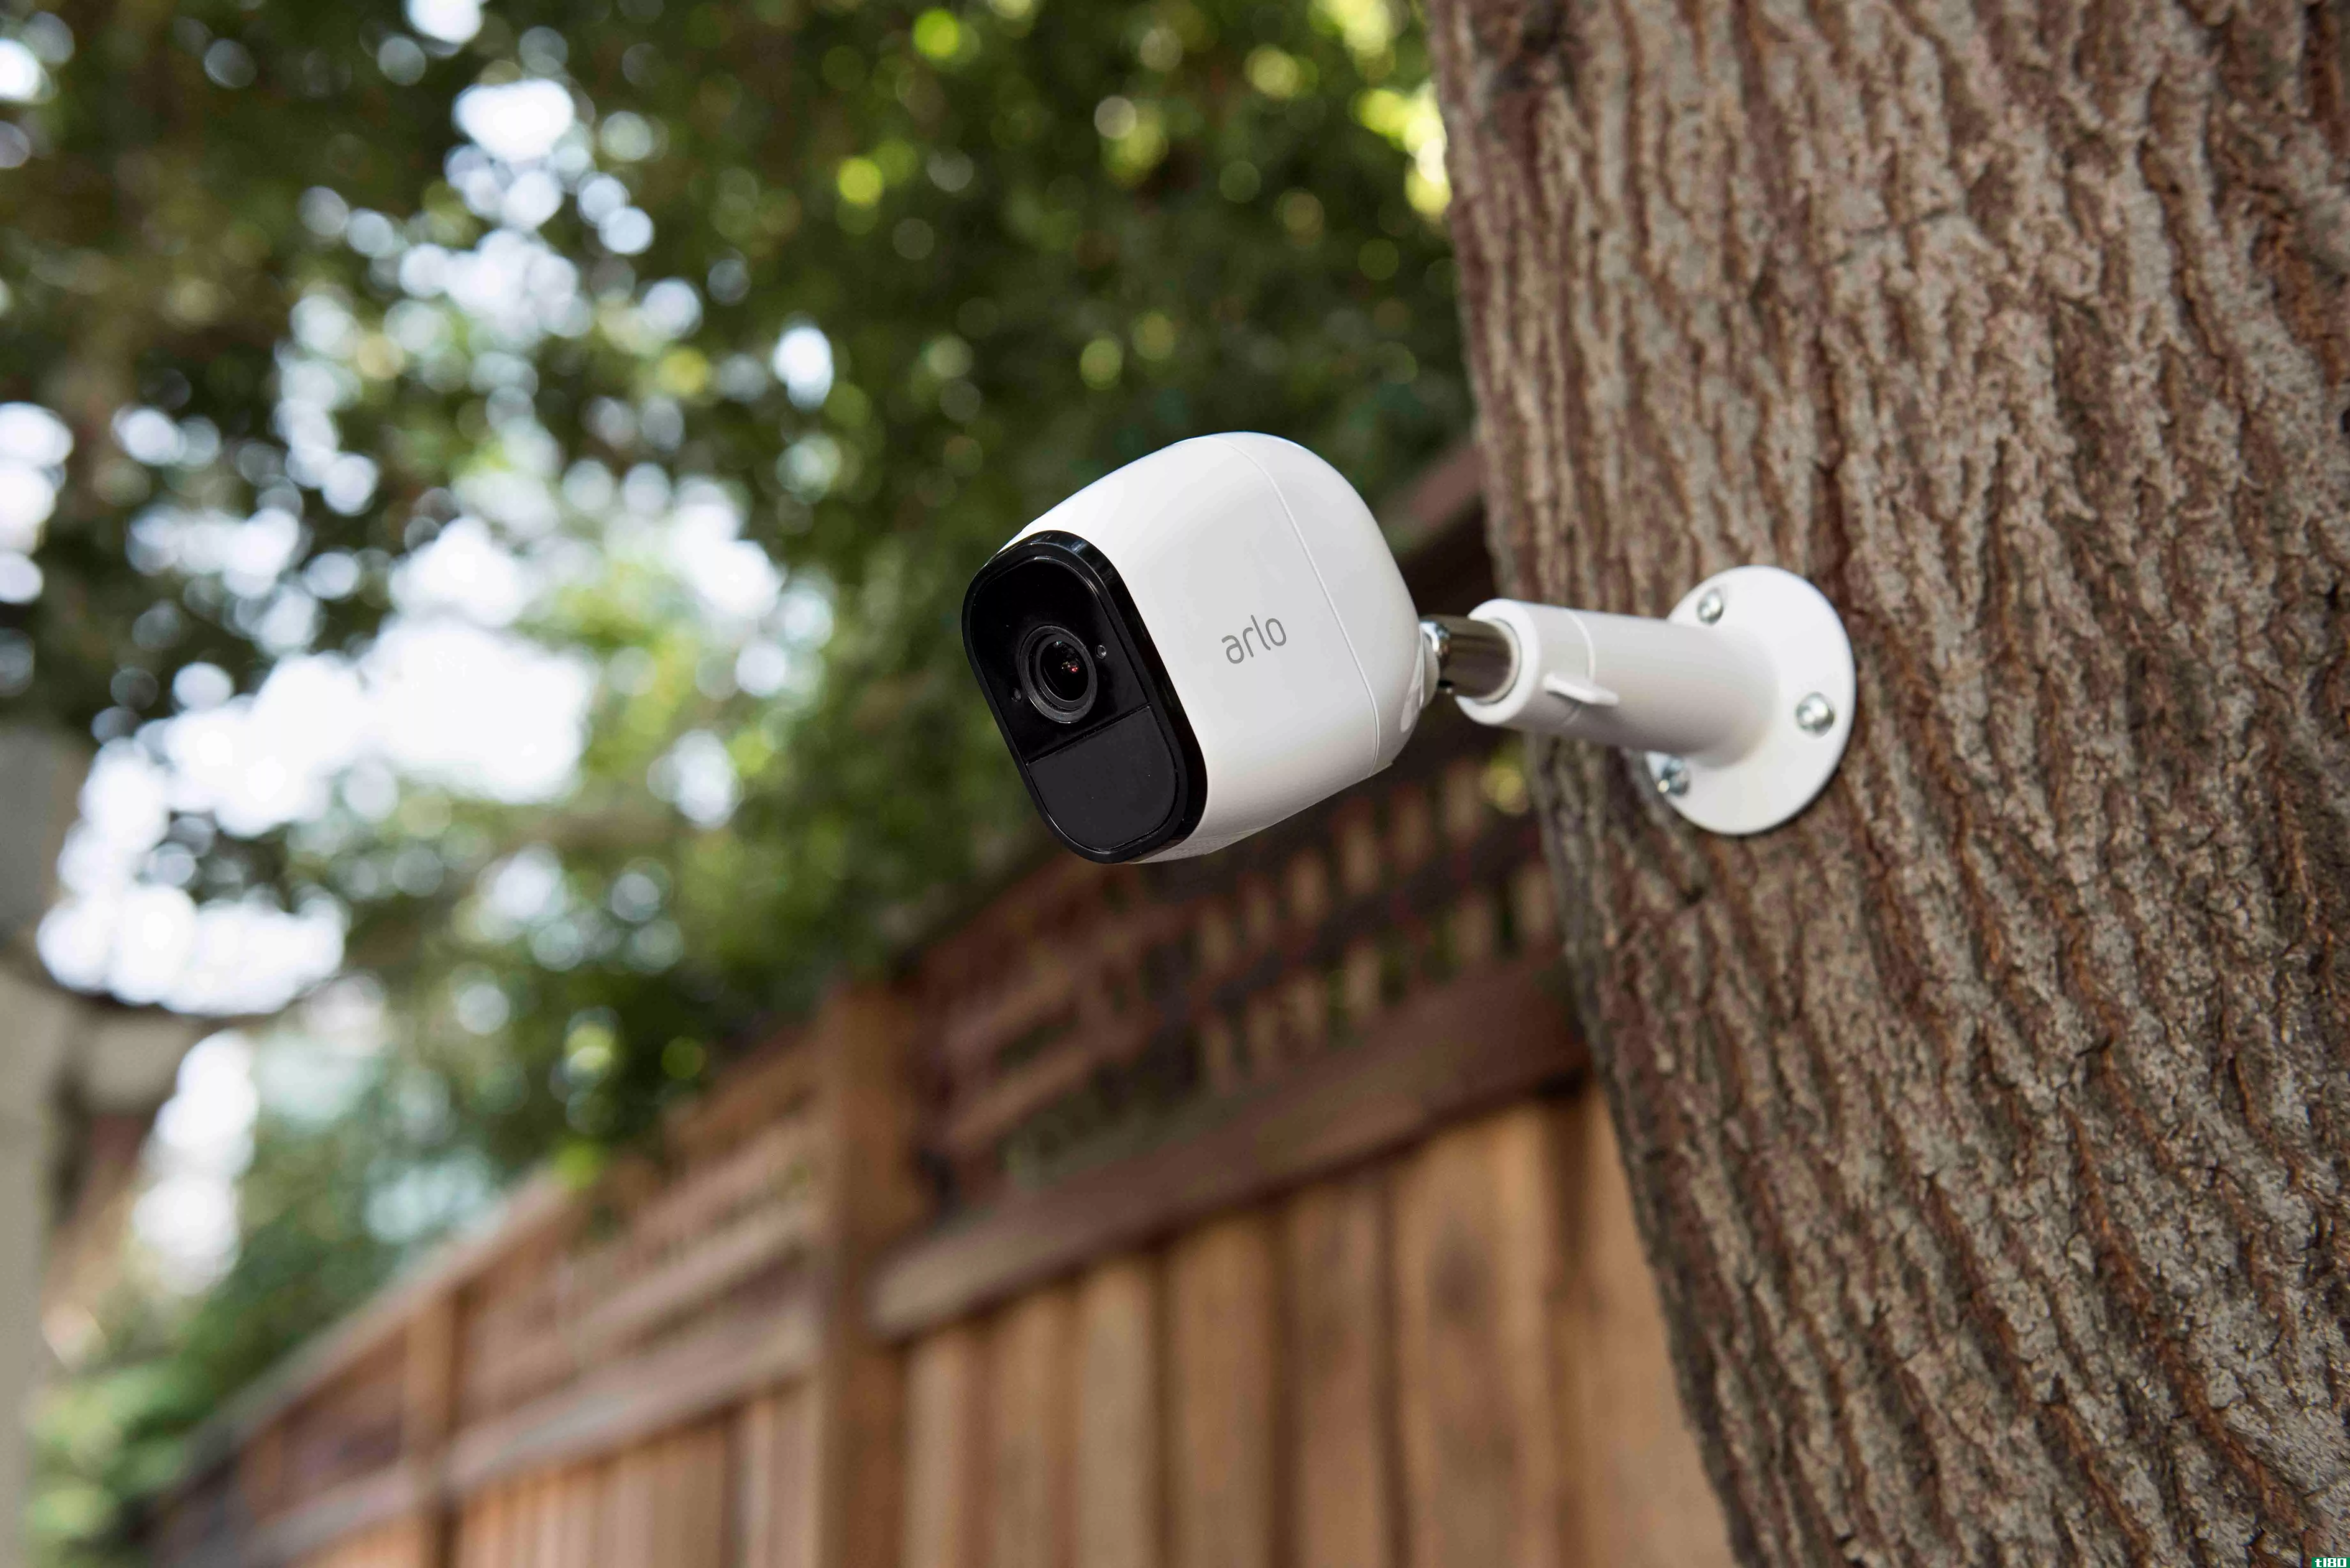 netgear声称其新的无线安全摄像头一次充电就可以使用6个月